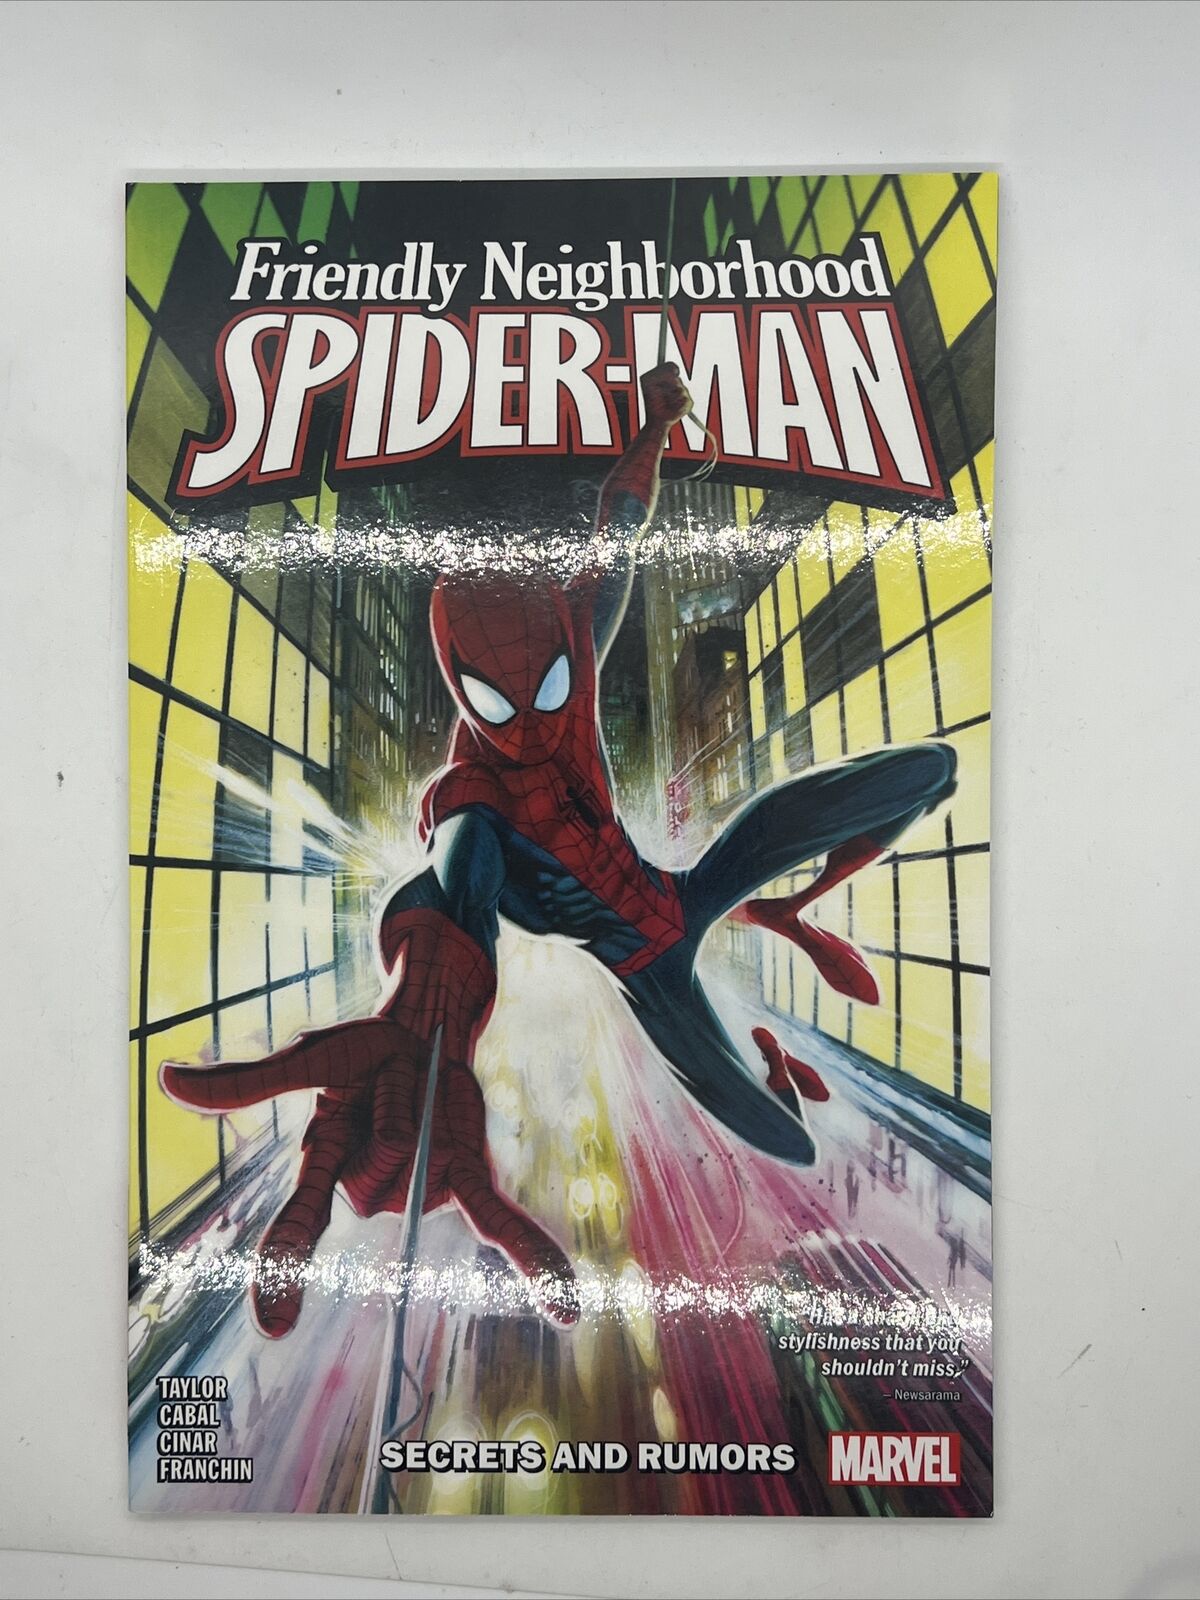 Friendly Neighborhood Spider-Man Vol. 1 by Taylor, Tom